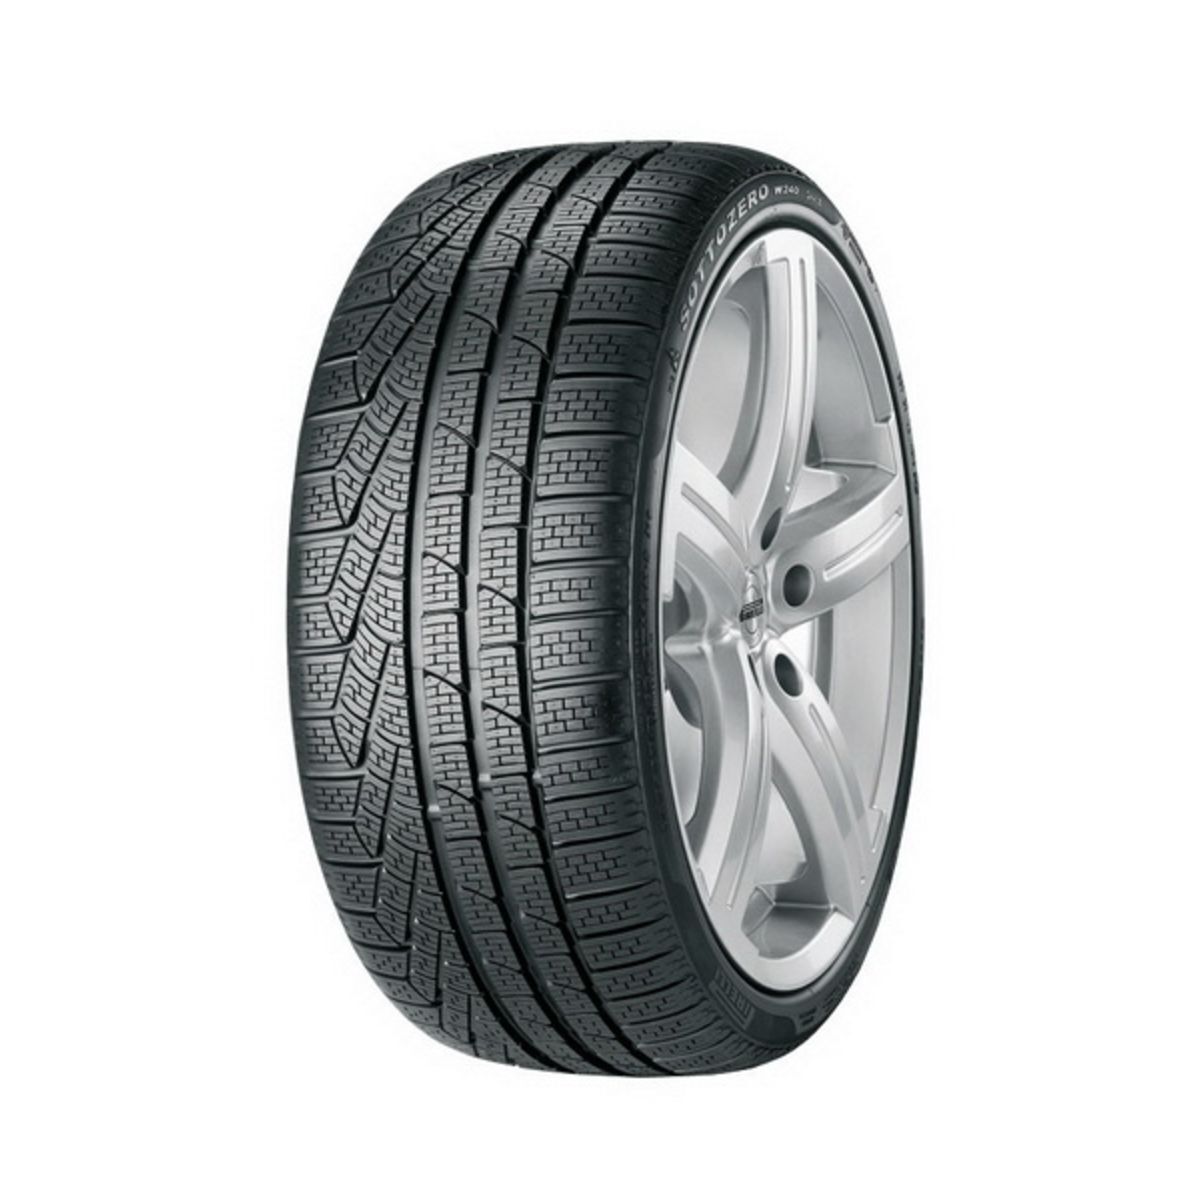 Neumáticos de invierno PIRELLI SottoZero serie II 255/40R19 XL 100V